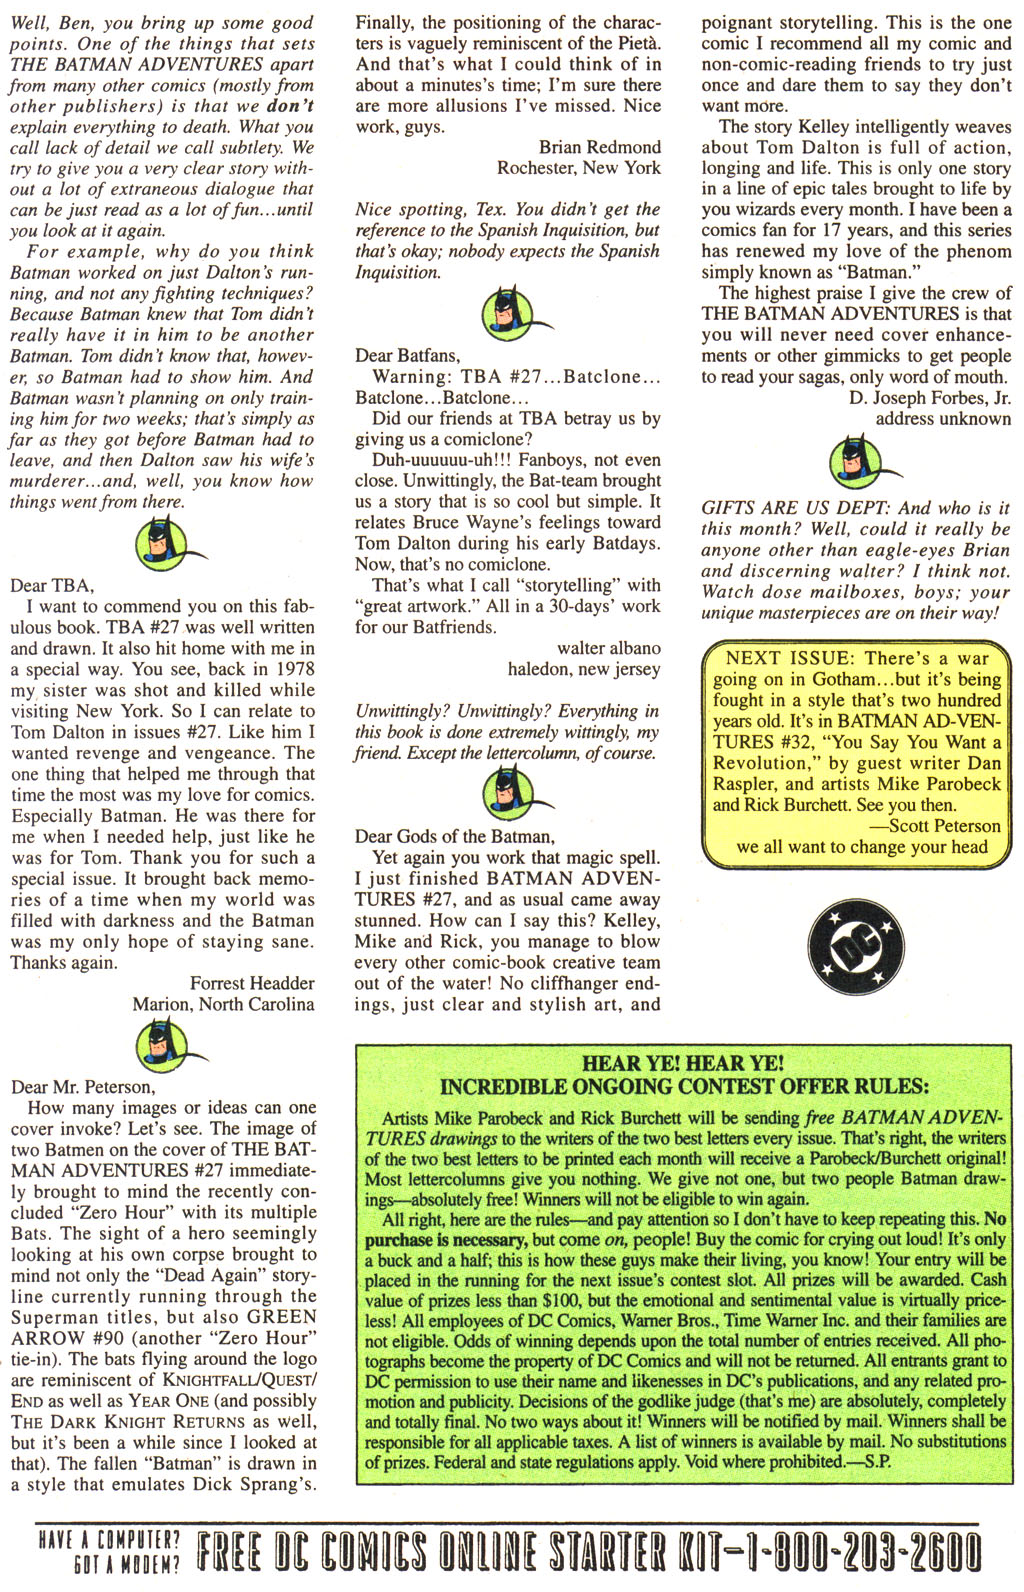 Read online The Batman Adventures comic -  Issue #31 - 25